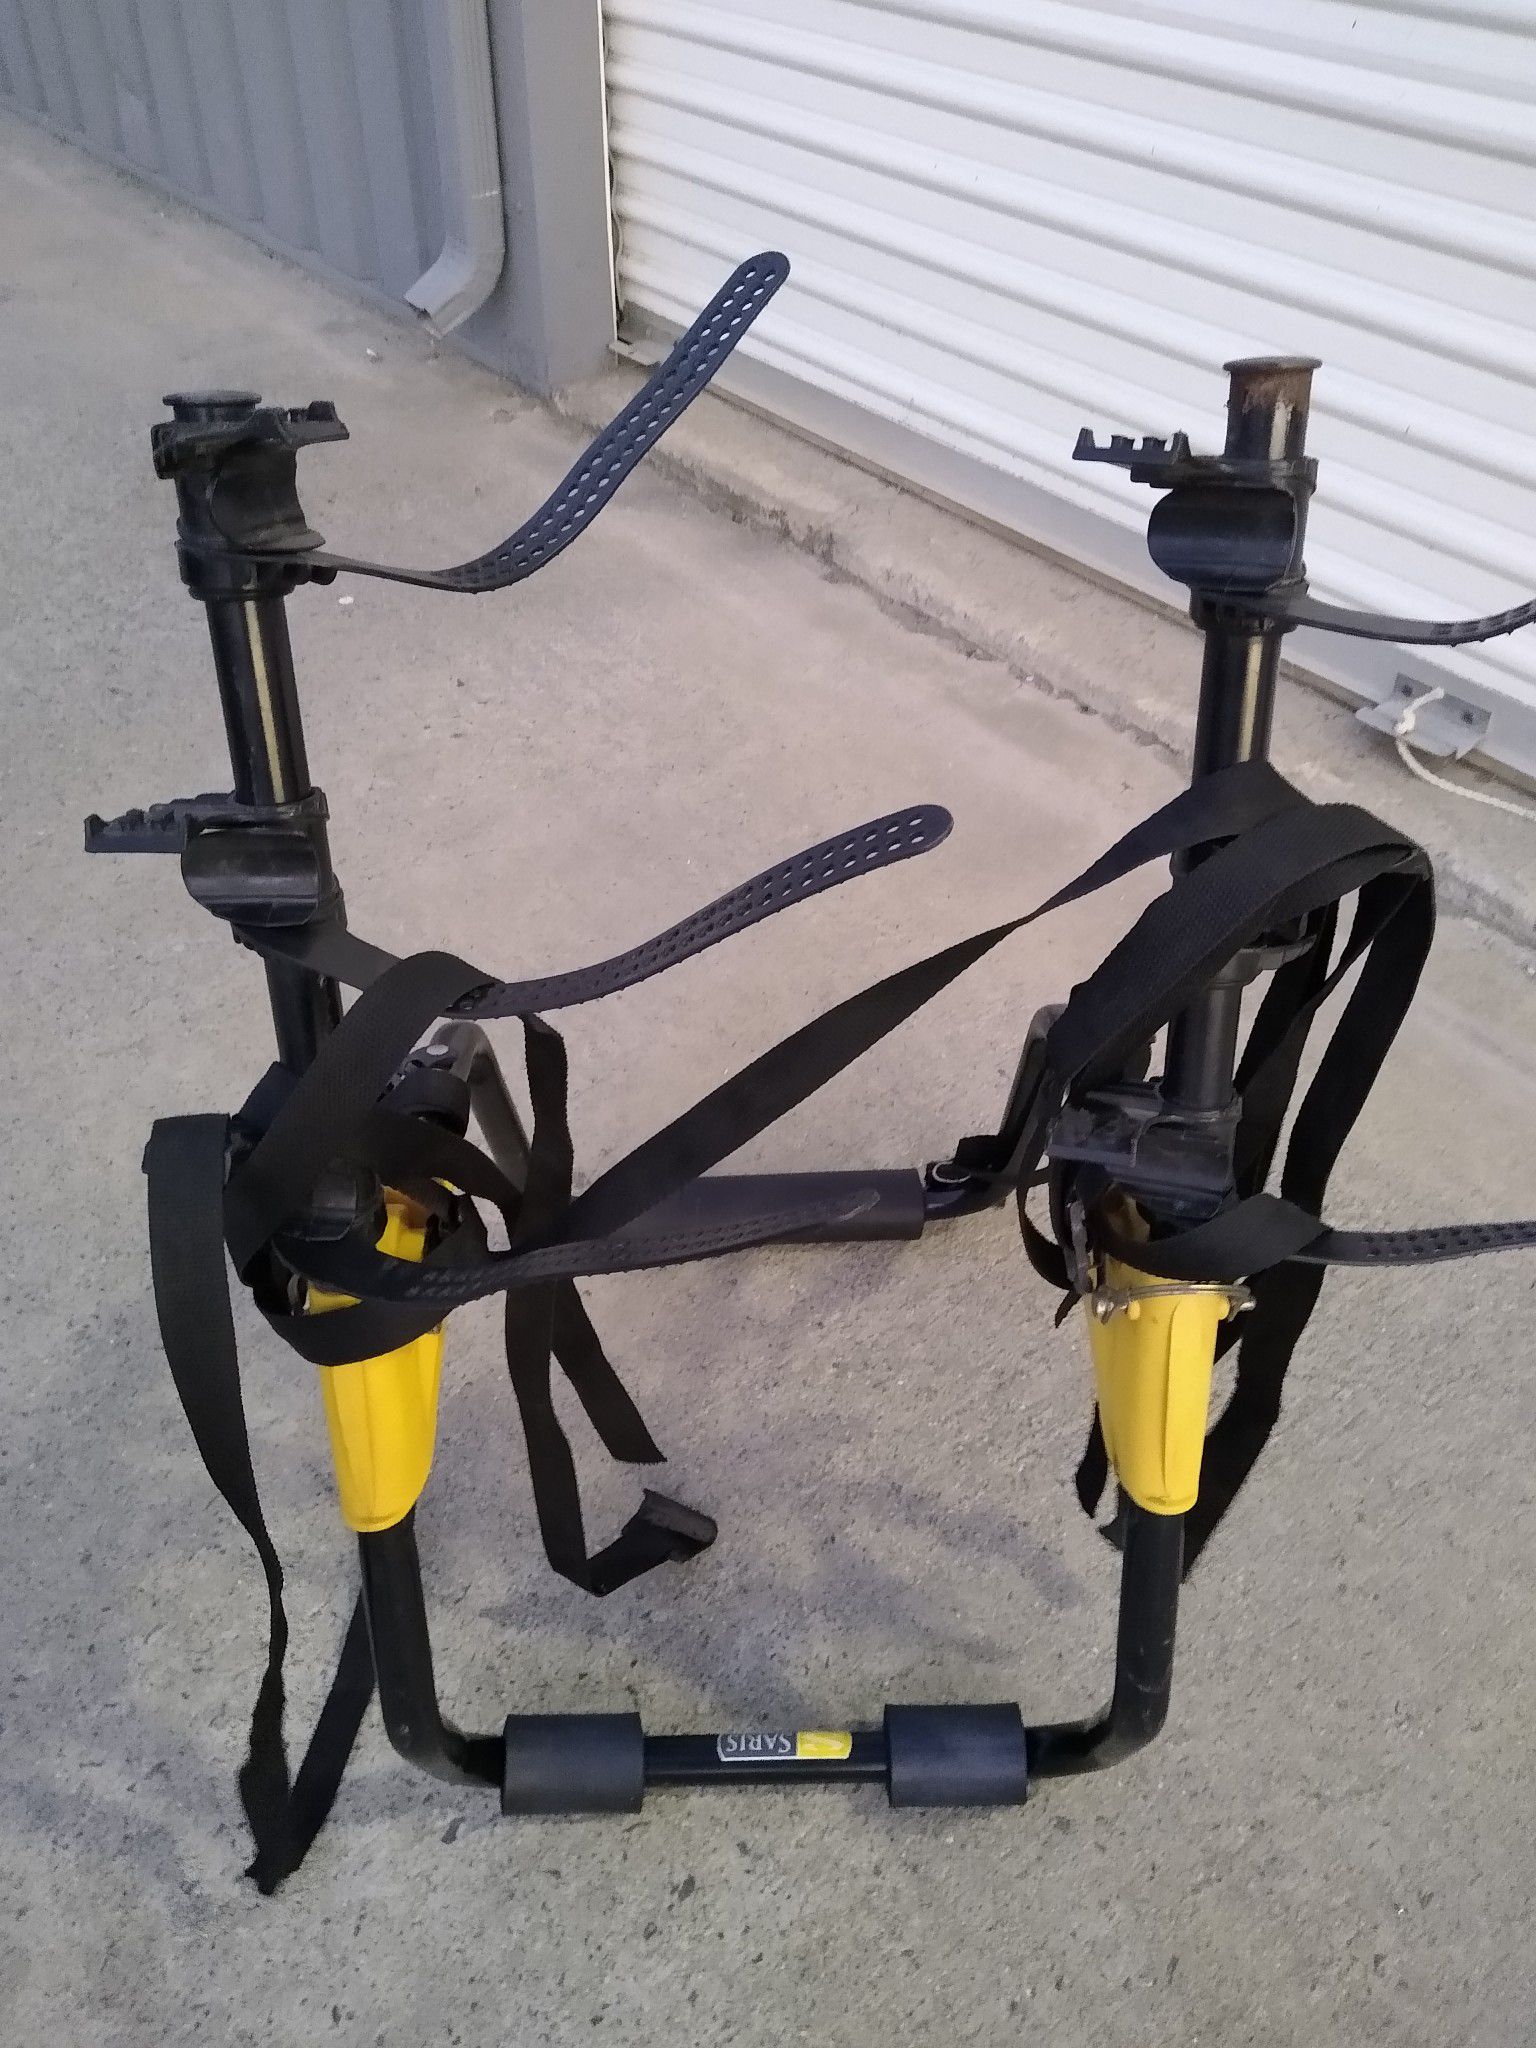 Vehicle bicycle rack, holds 3 bikes!